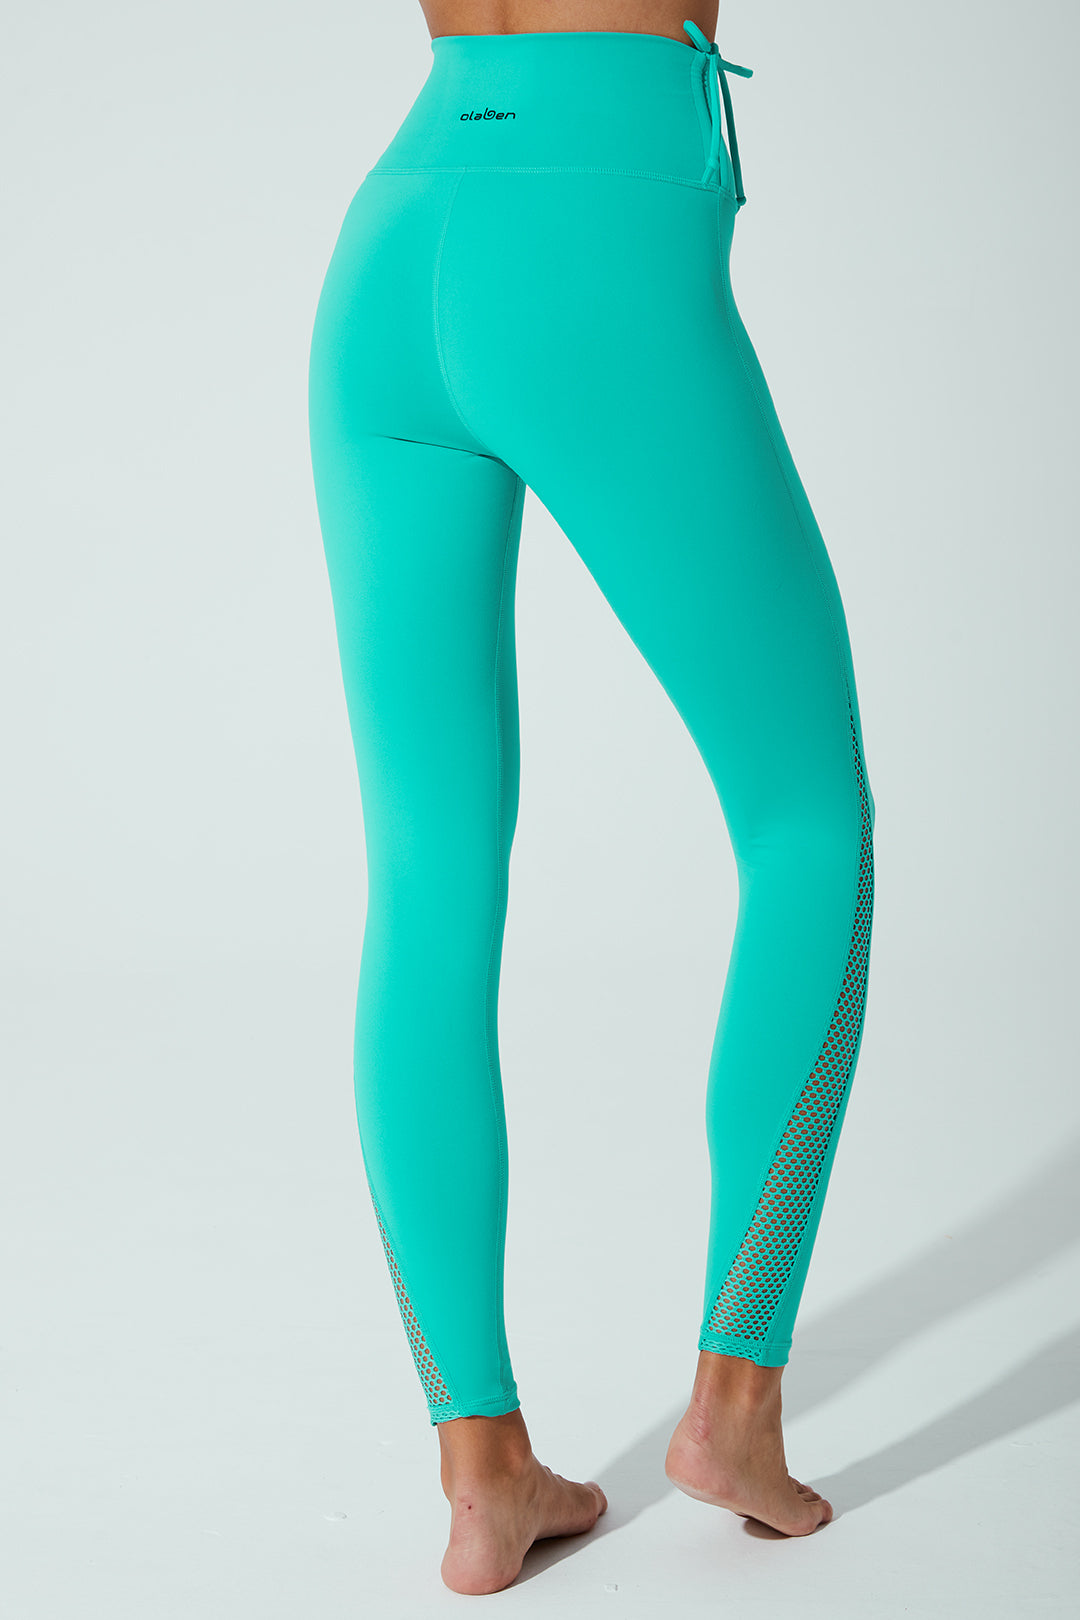 Java green Clarita mesh leggings for women, style OW-0100-WLG-GN, shown in image 3.